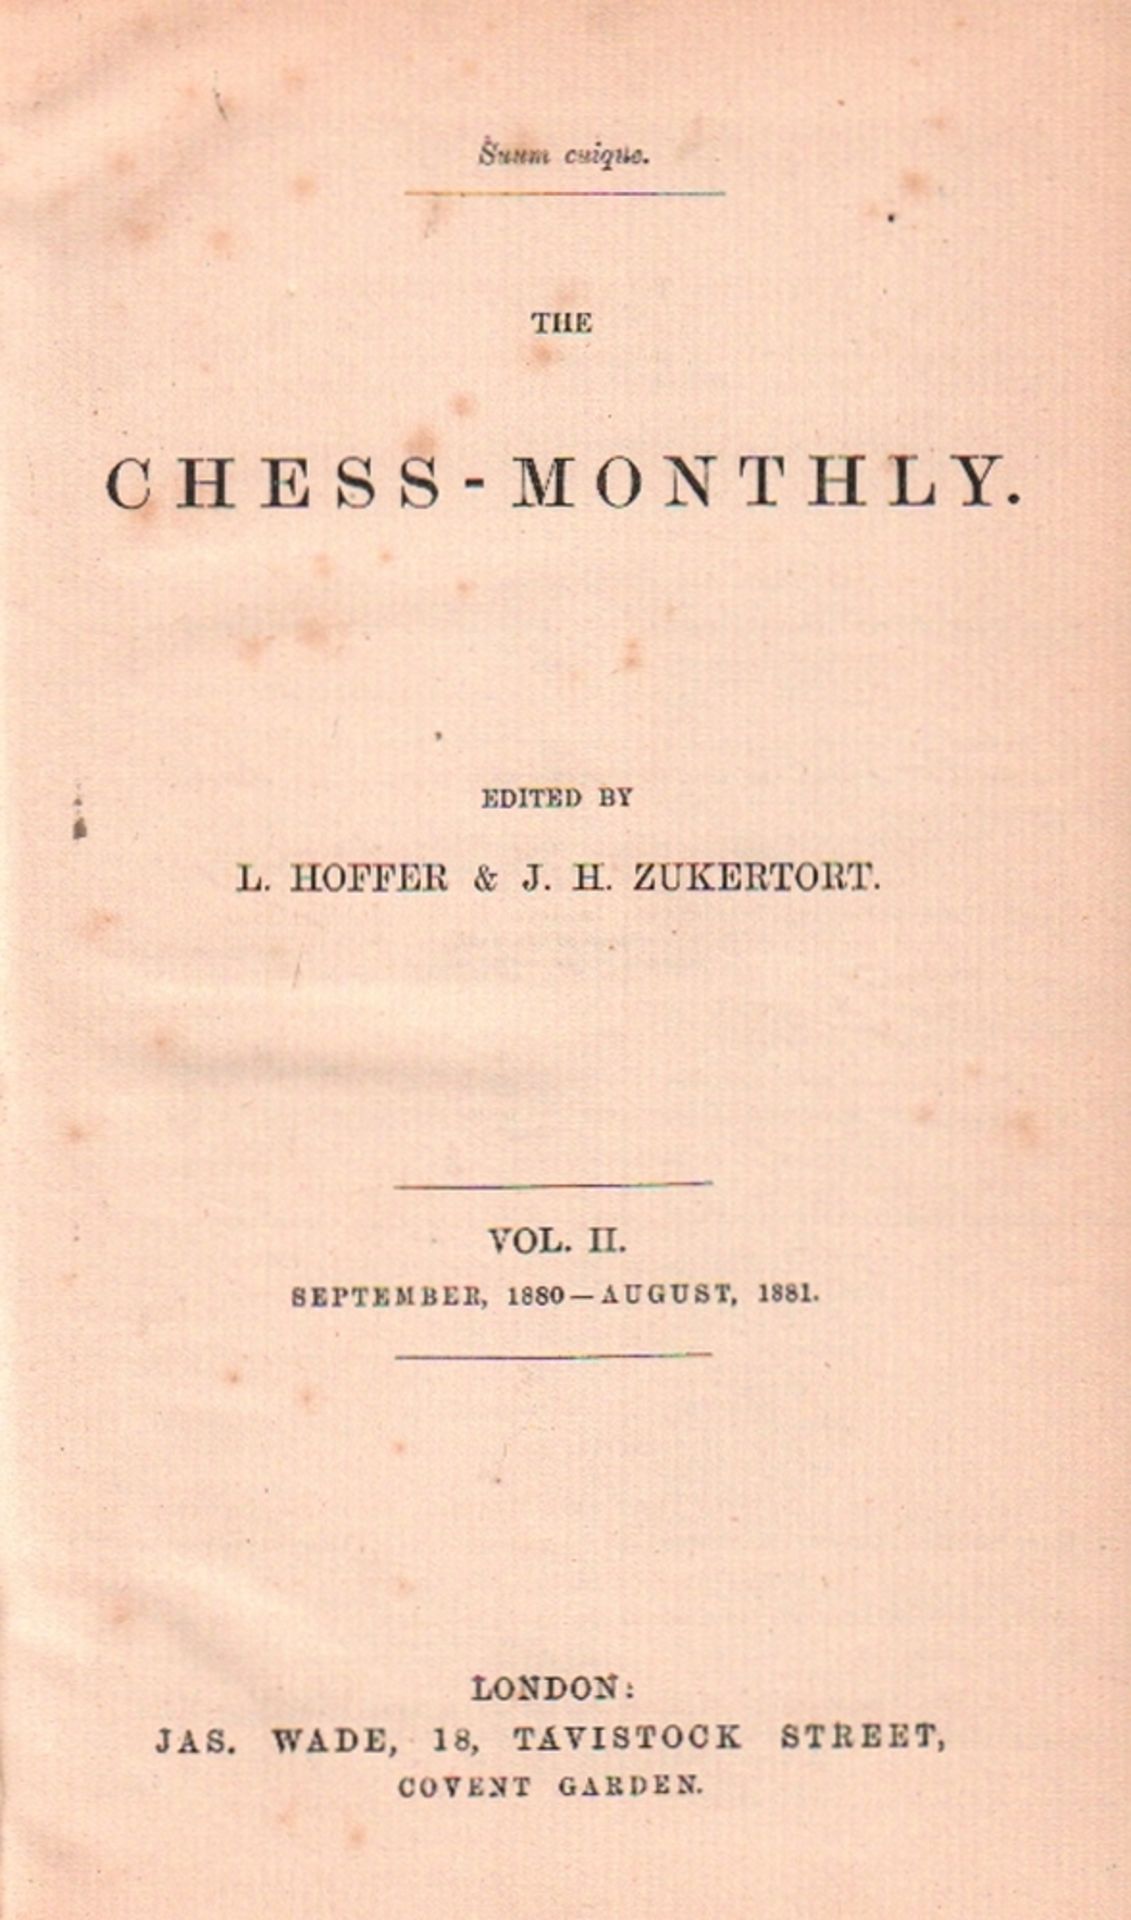 The Chess - Monthly. Edited by L. Hoffer & J. H. Zukertort. Volume II, September 1880 - August 1881.